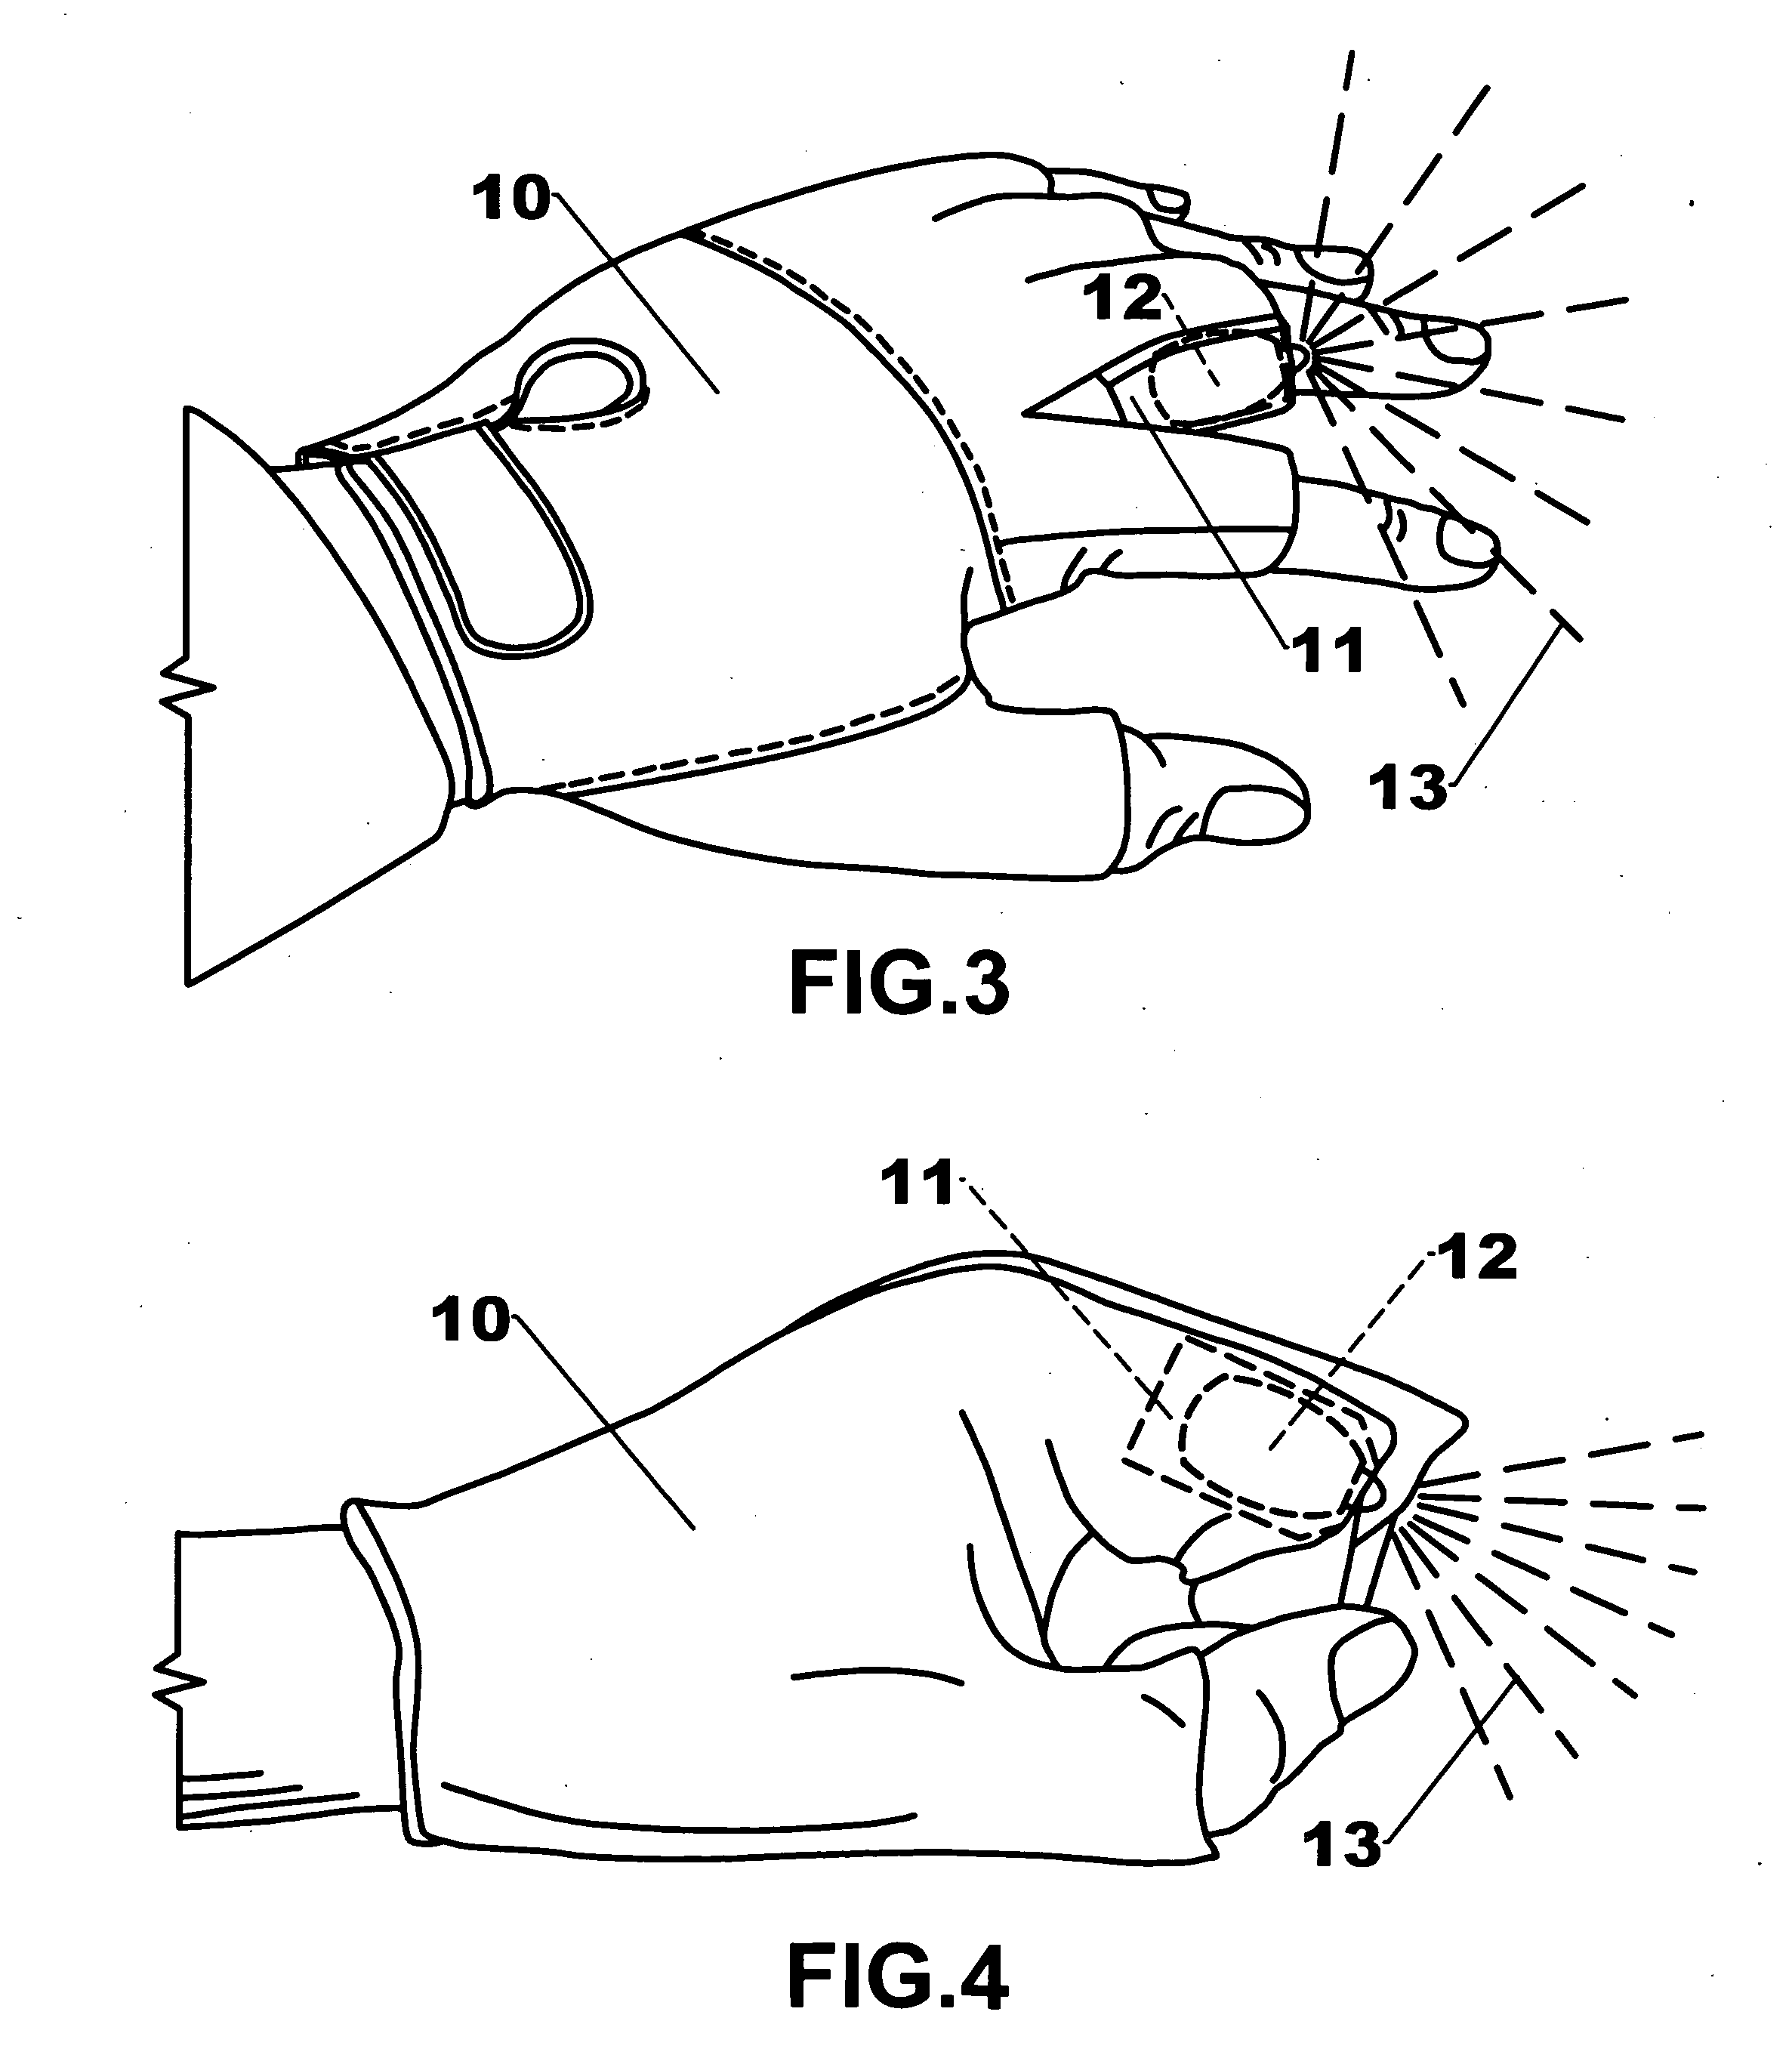 Ergonomic hand-mounted illumination device